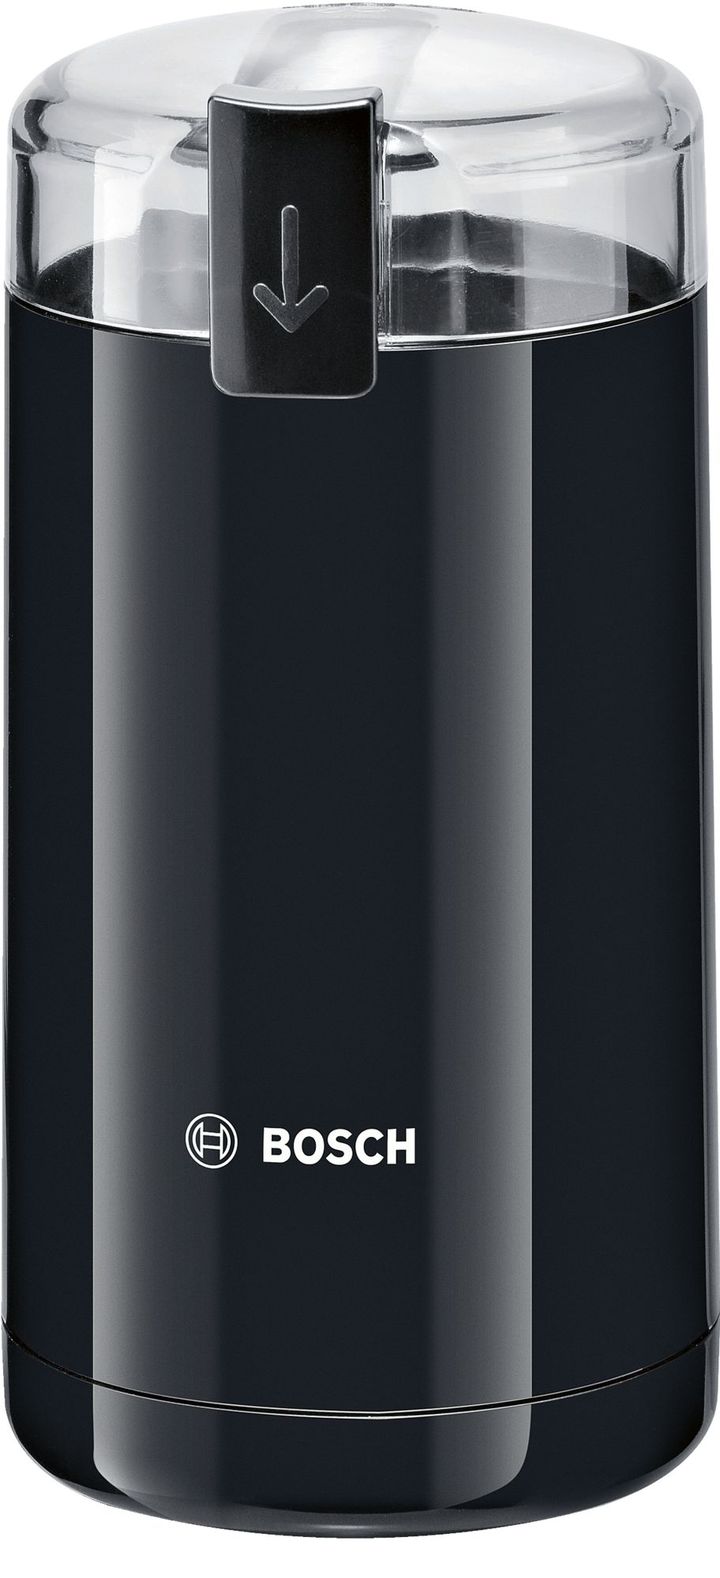 TSM6A013B kahvimylly terällä - Musta - Bosch